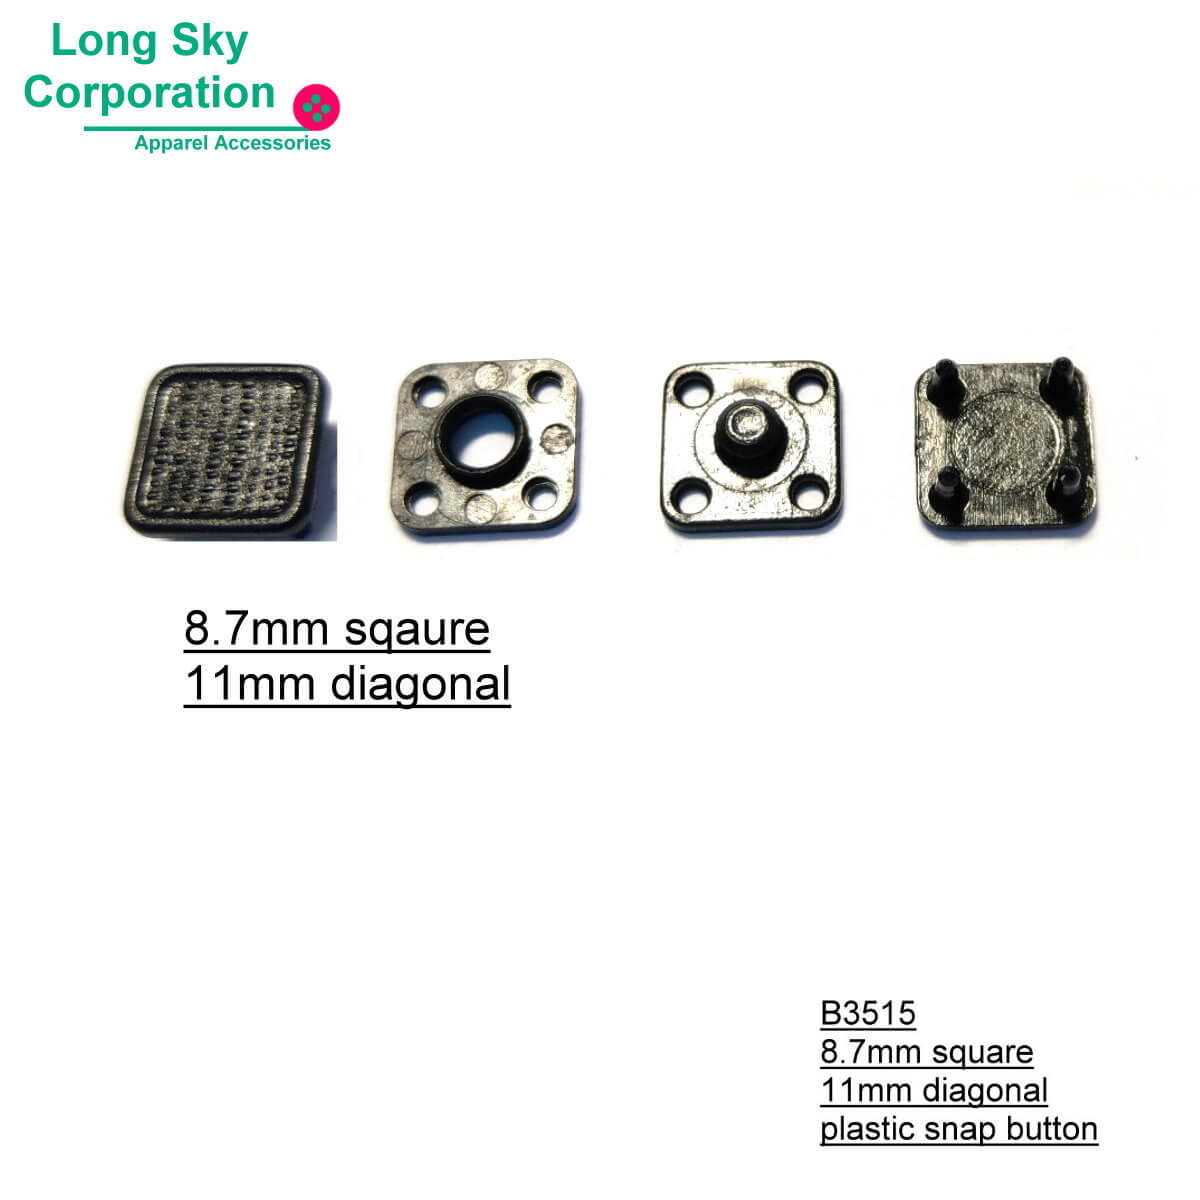 (#B3515) 8.7mm square plastic snap button